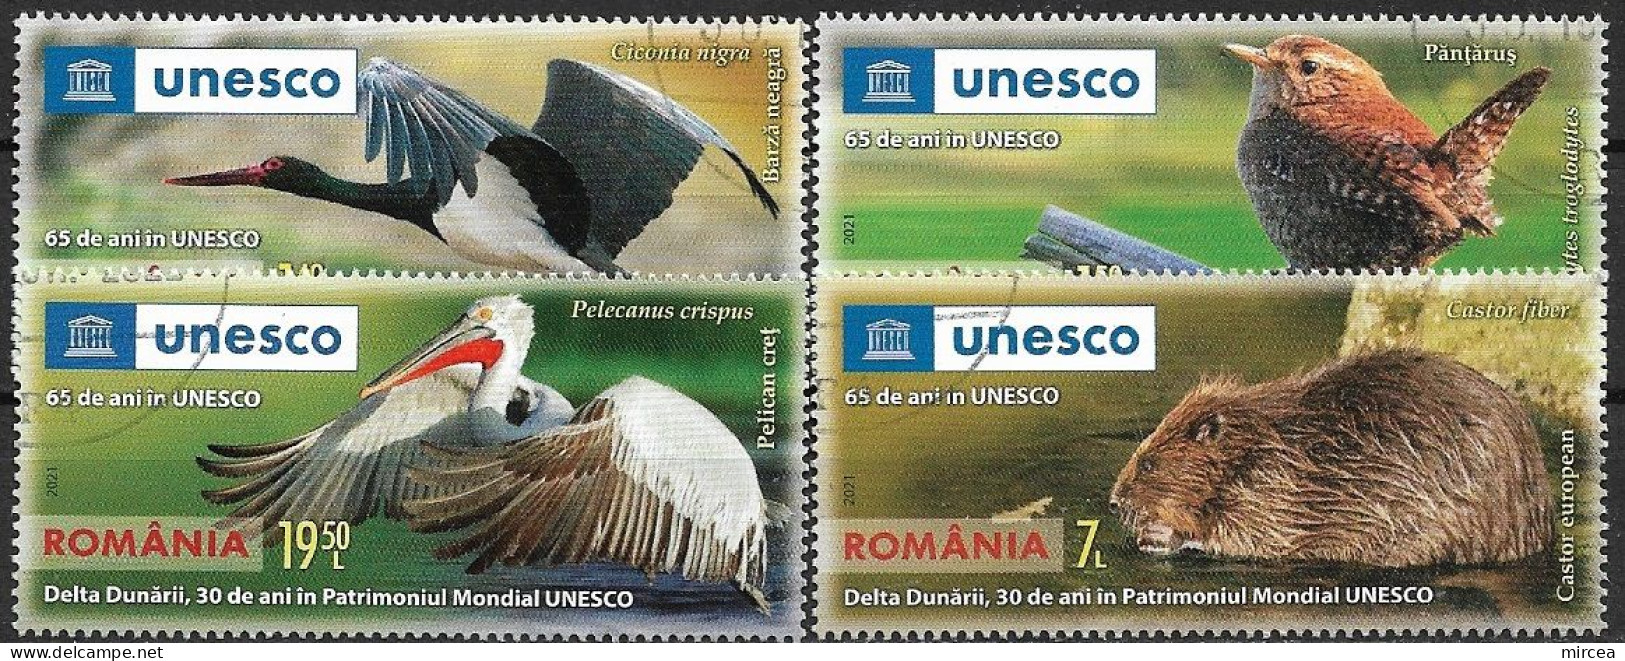 C3935 - Roumanie 2021 - UNESCO 4v.obliteres - Used Stamps